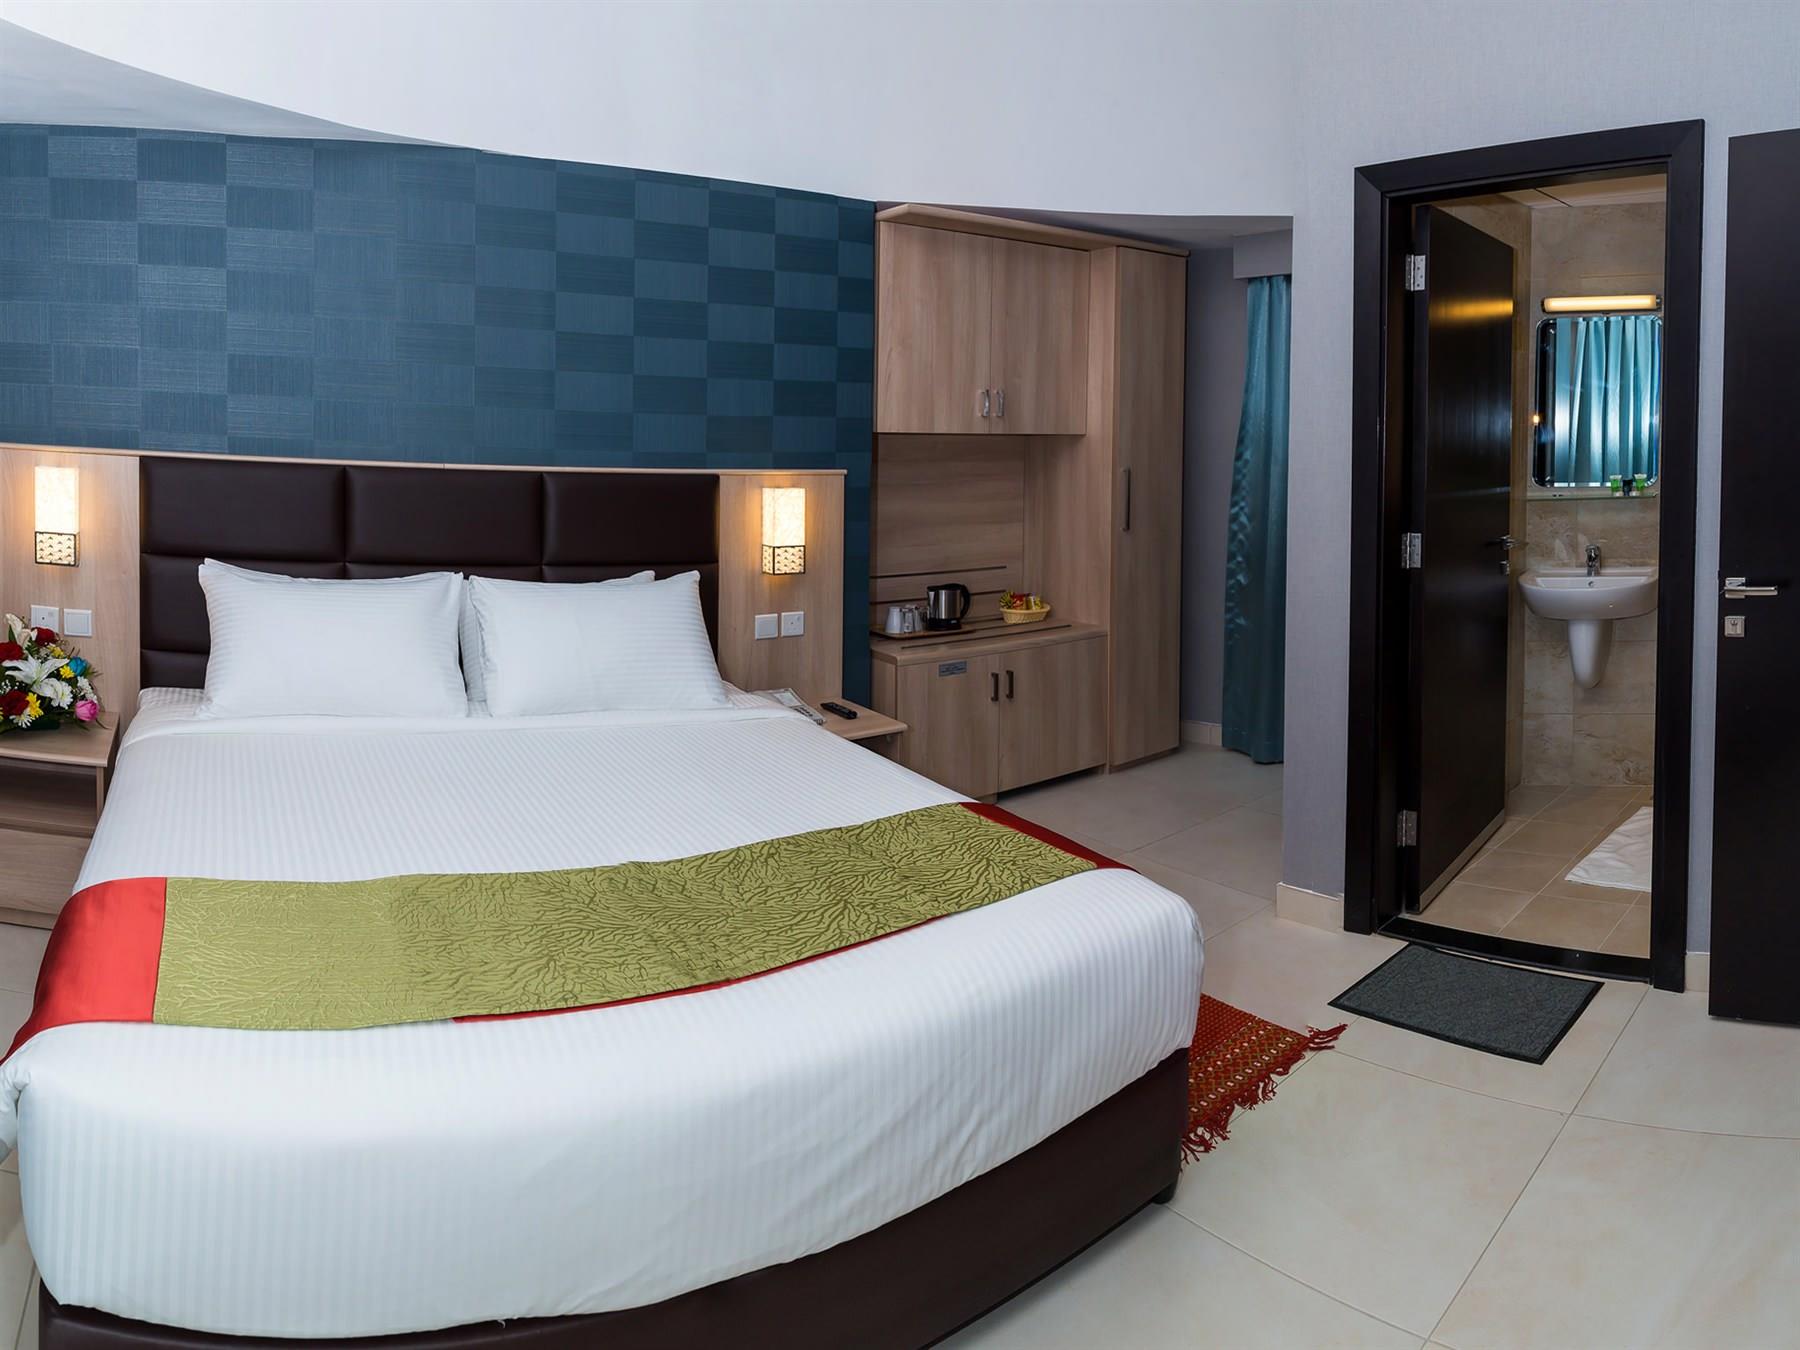 Florida Square Hotel Dubai 2*